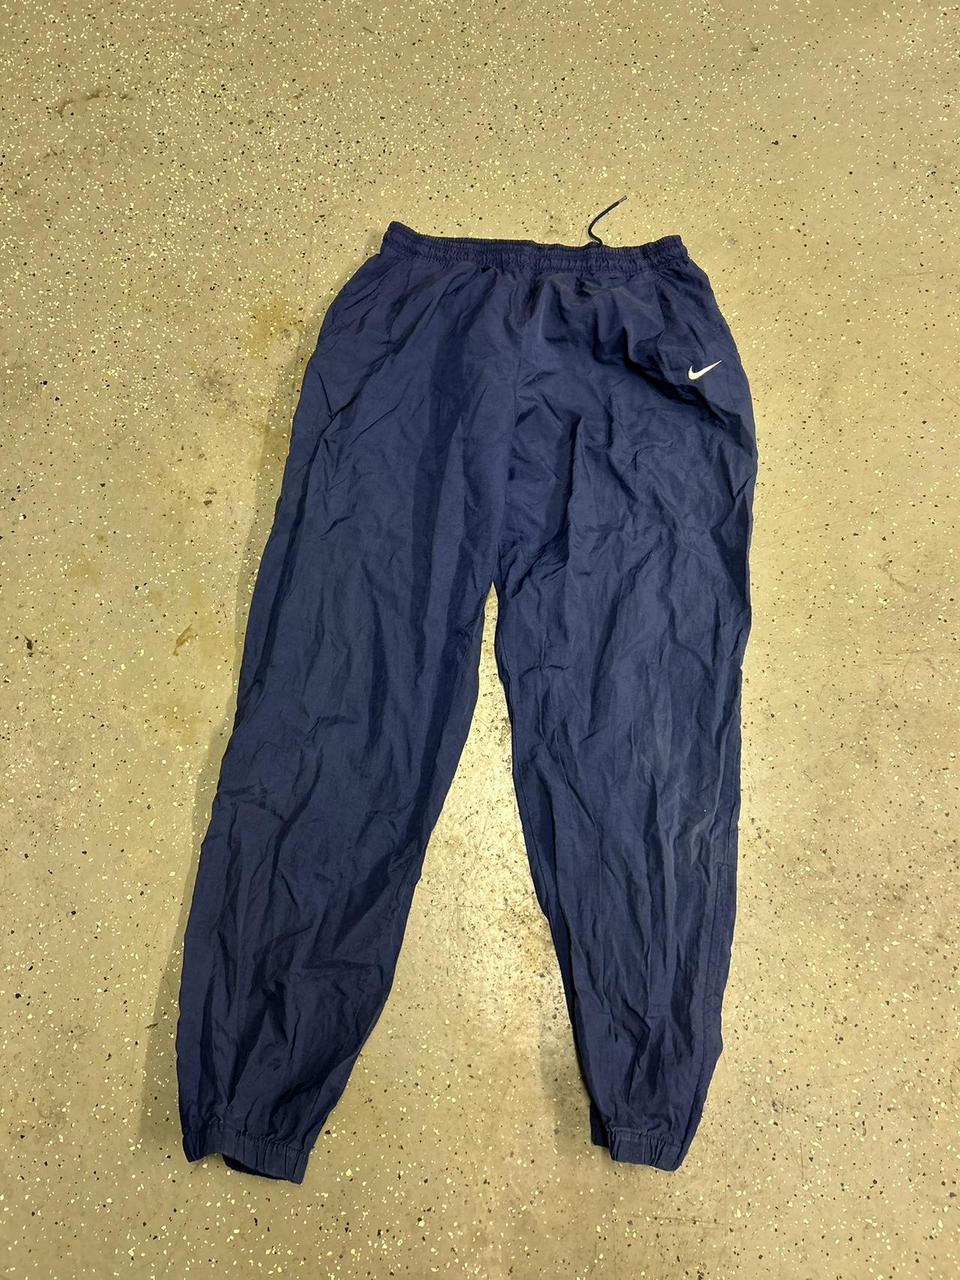 Large 90’s navy Nike track pants Great pair of... - Depop